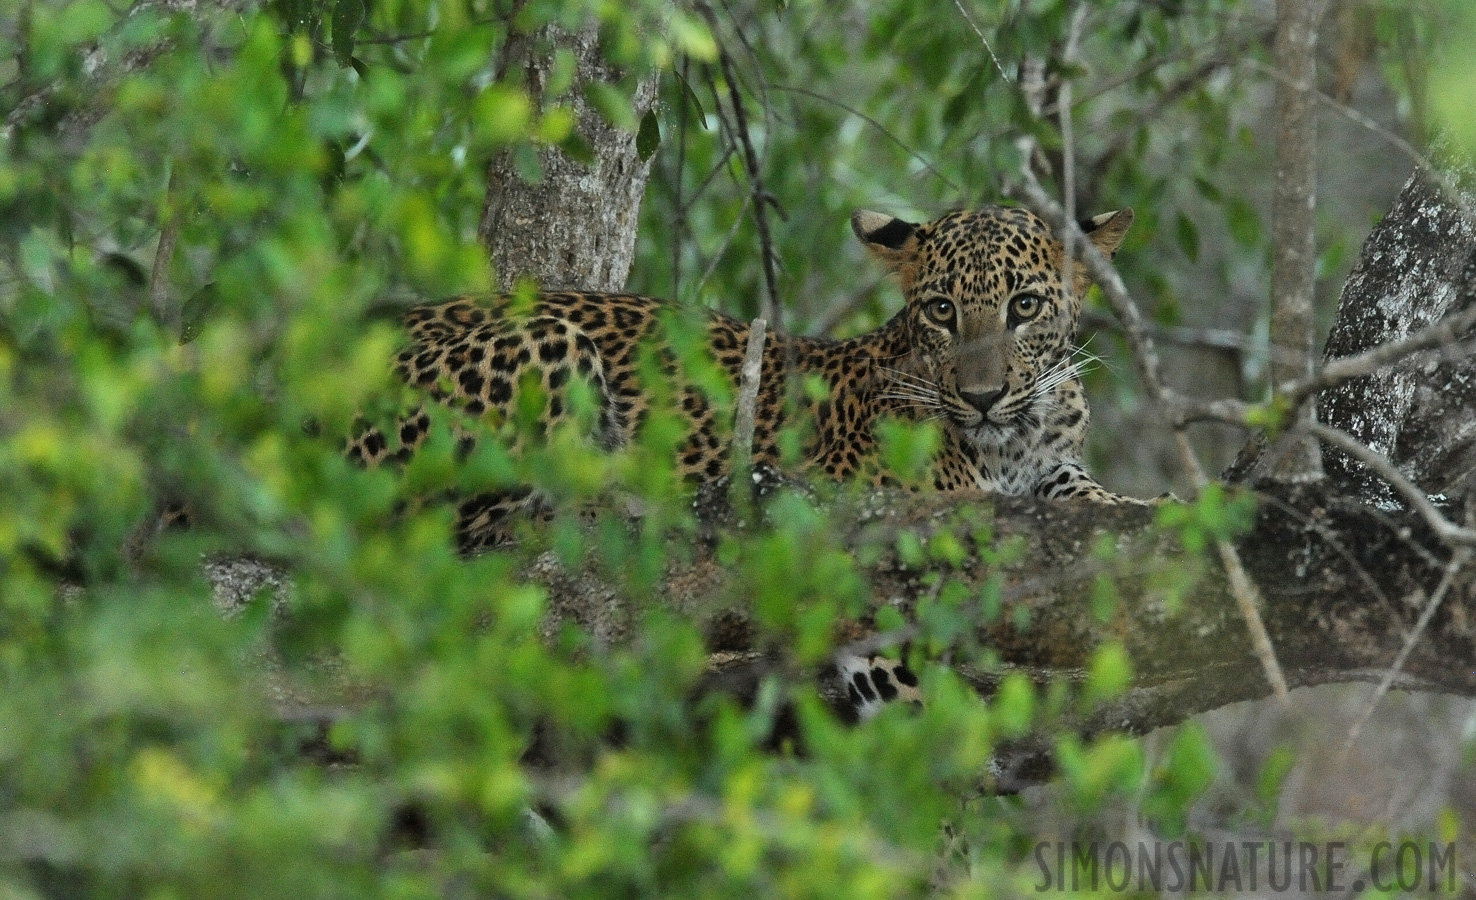 Panthera pardus kotiya [550 mm, 1/60 sec at f / 8.0, ISO 6400]